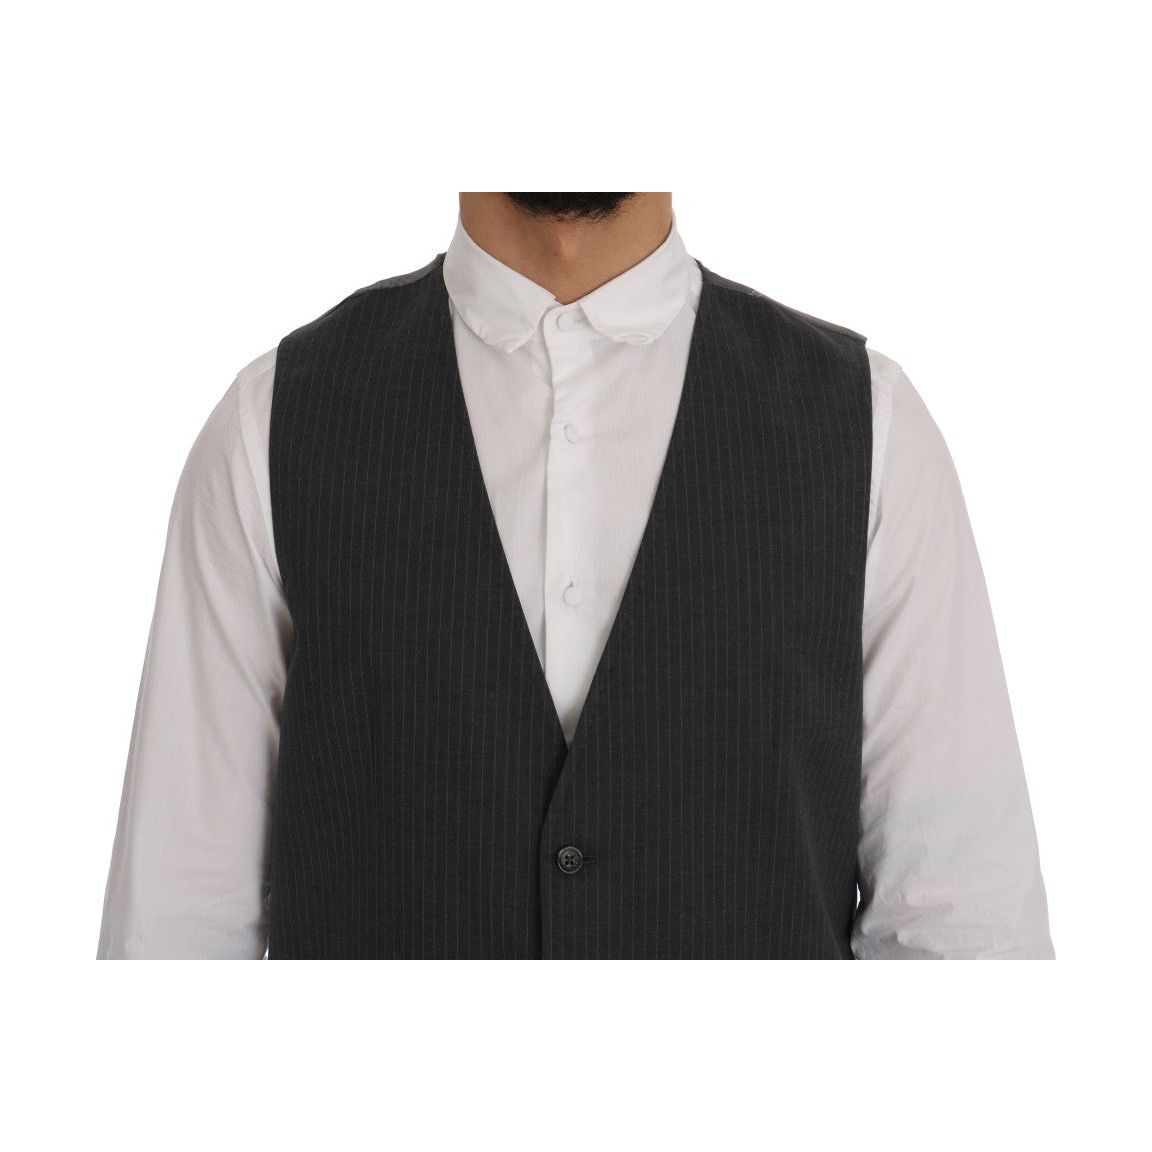 Dolce & Gabbana Elegant Gray Striped Waistcoat Vest gray-staff-cotton-striped-vest-1 478457-gray-staff-cotton-striped-vest-2-3.jpg